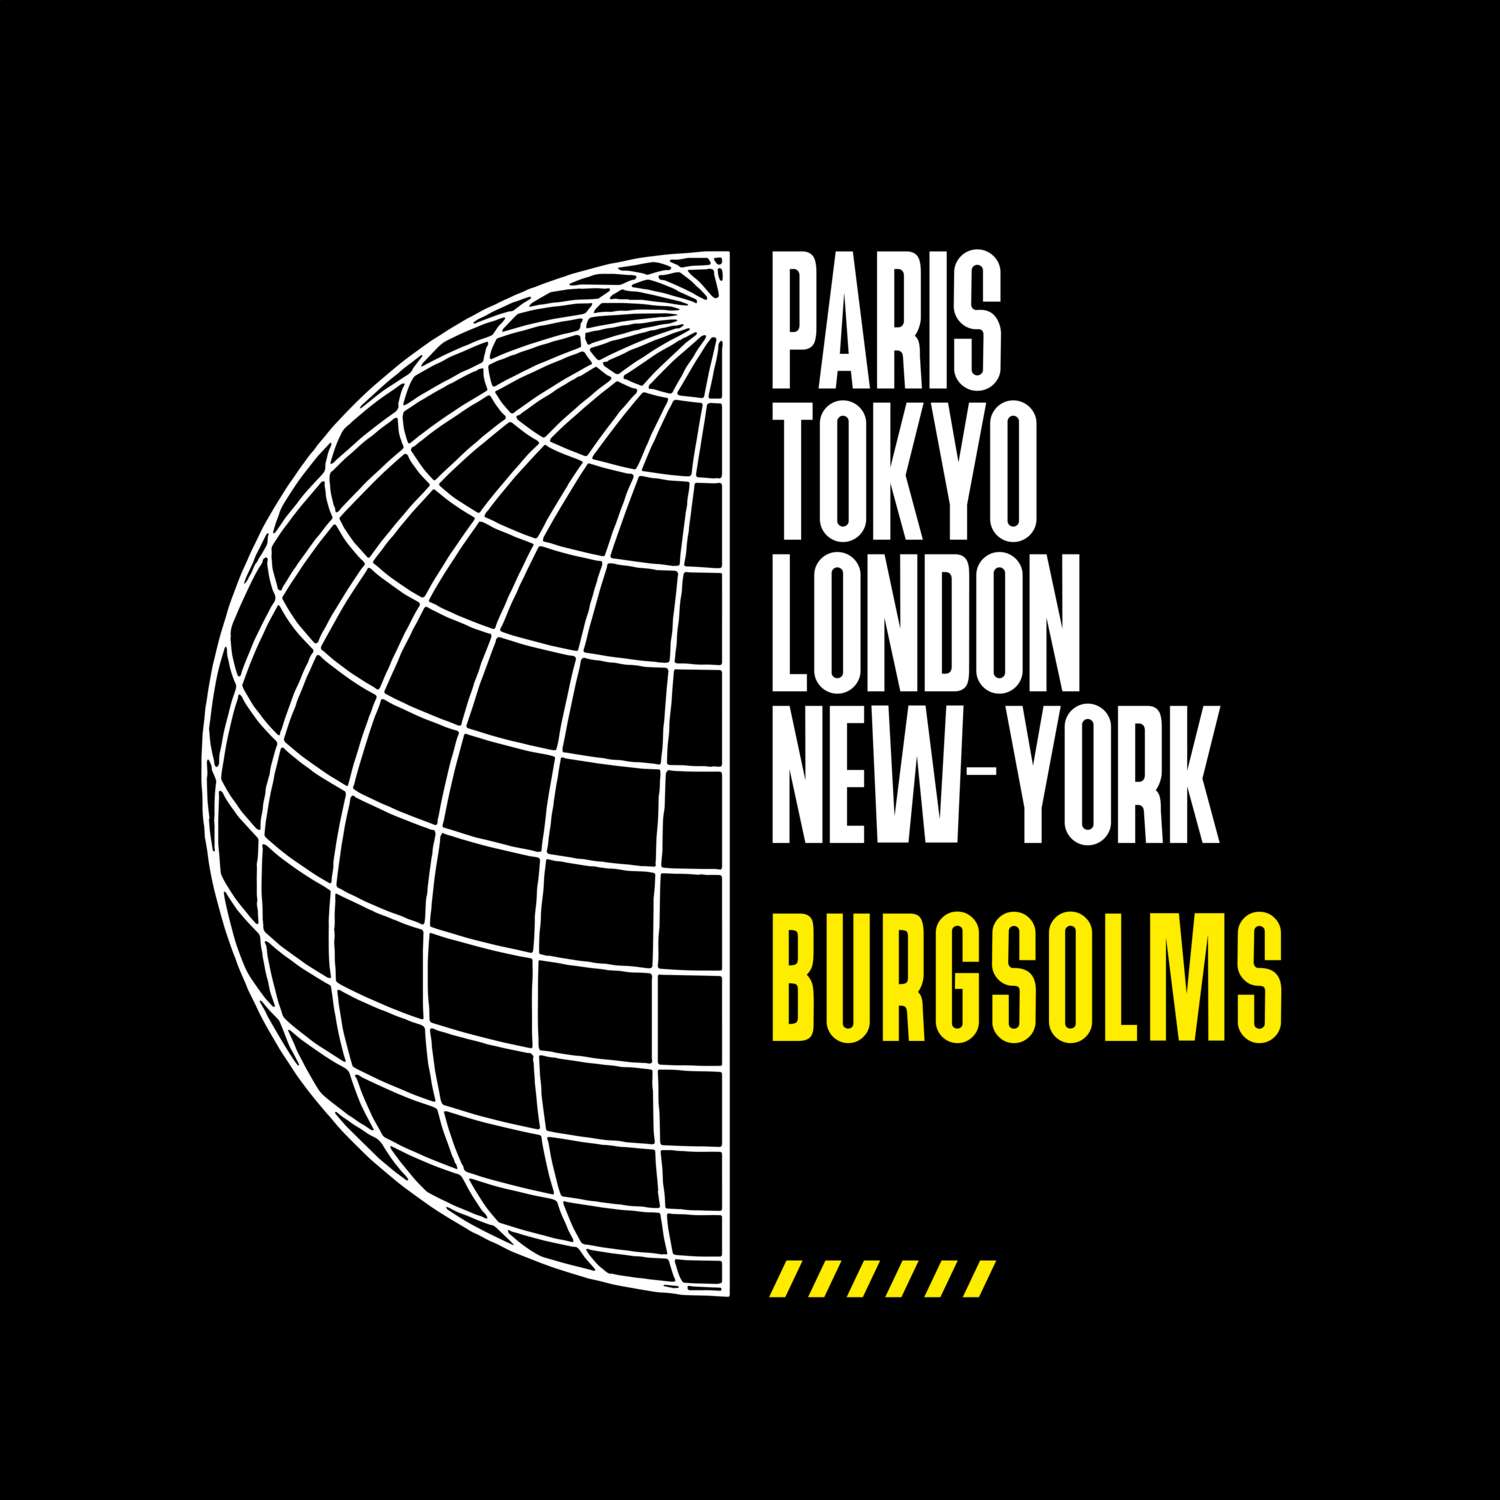 Burgsolms T-Shirt »Paris Tokyo London«